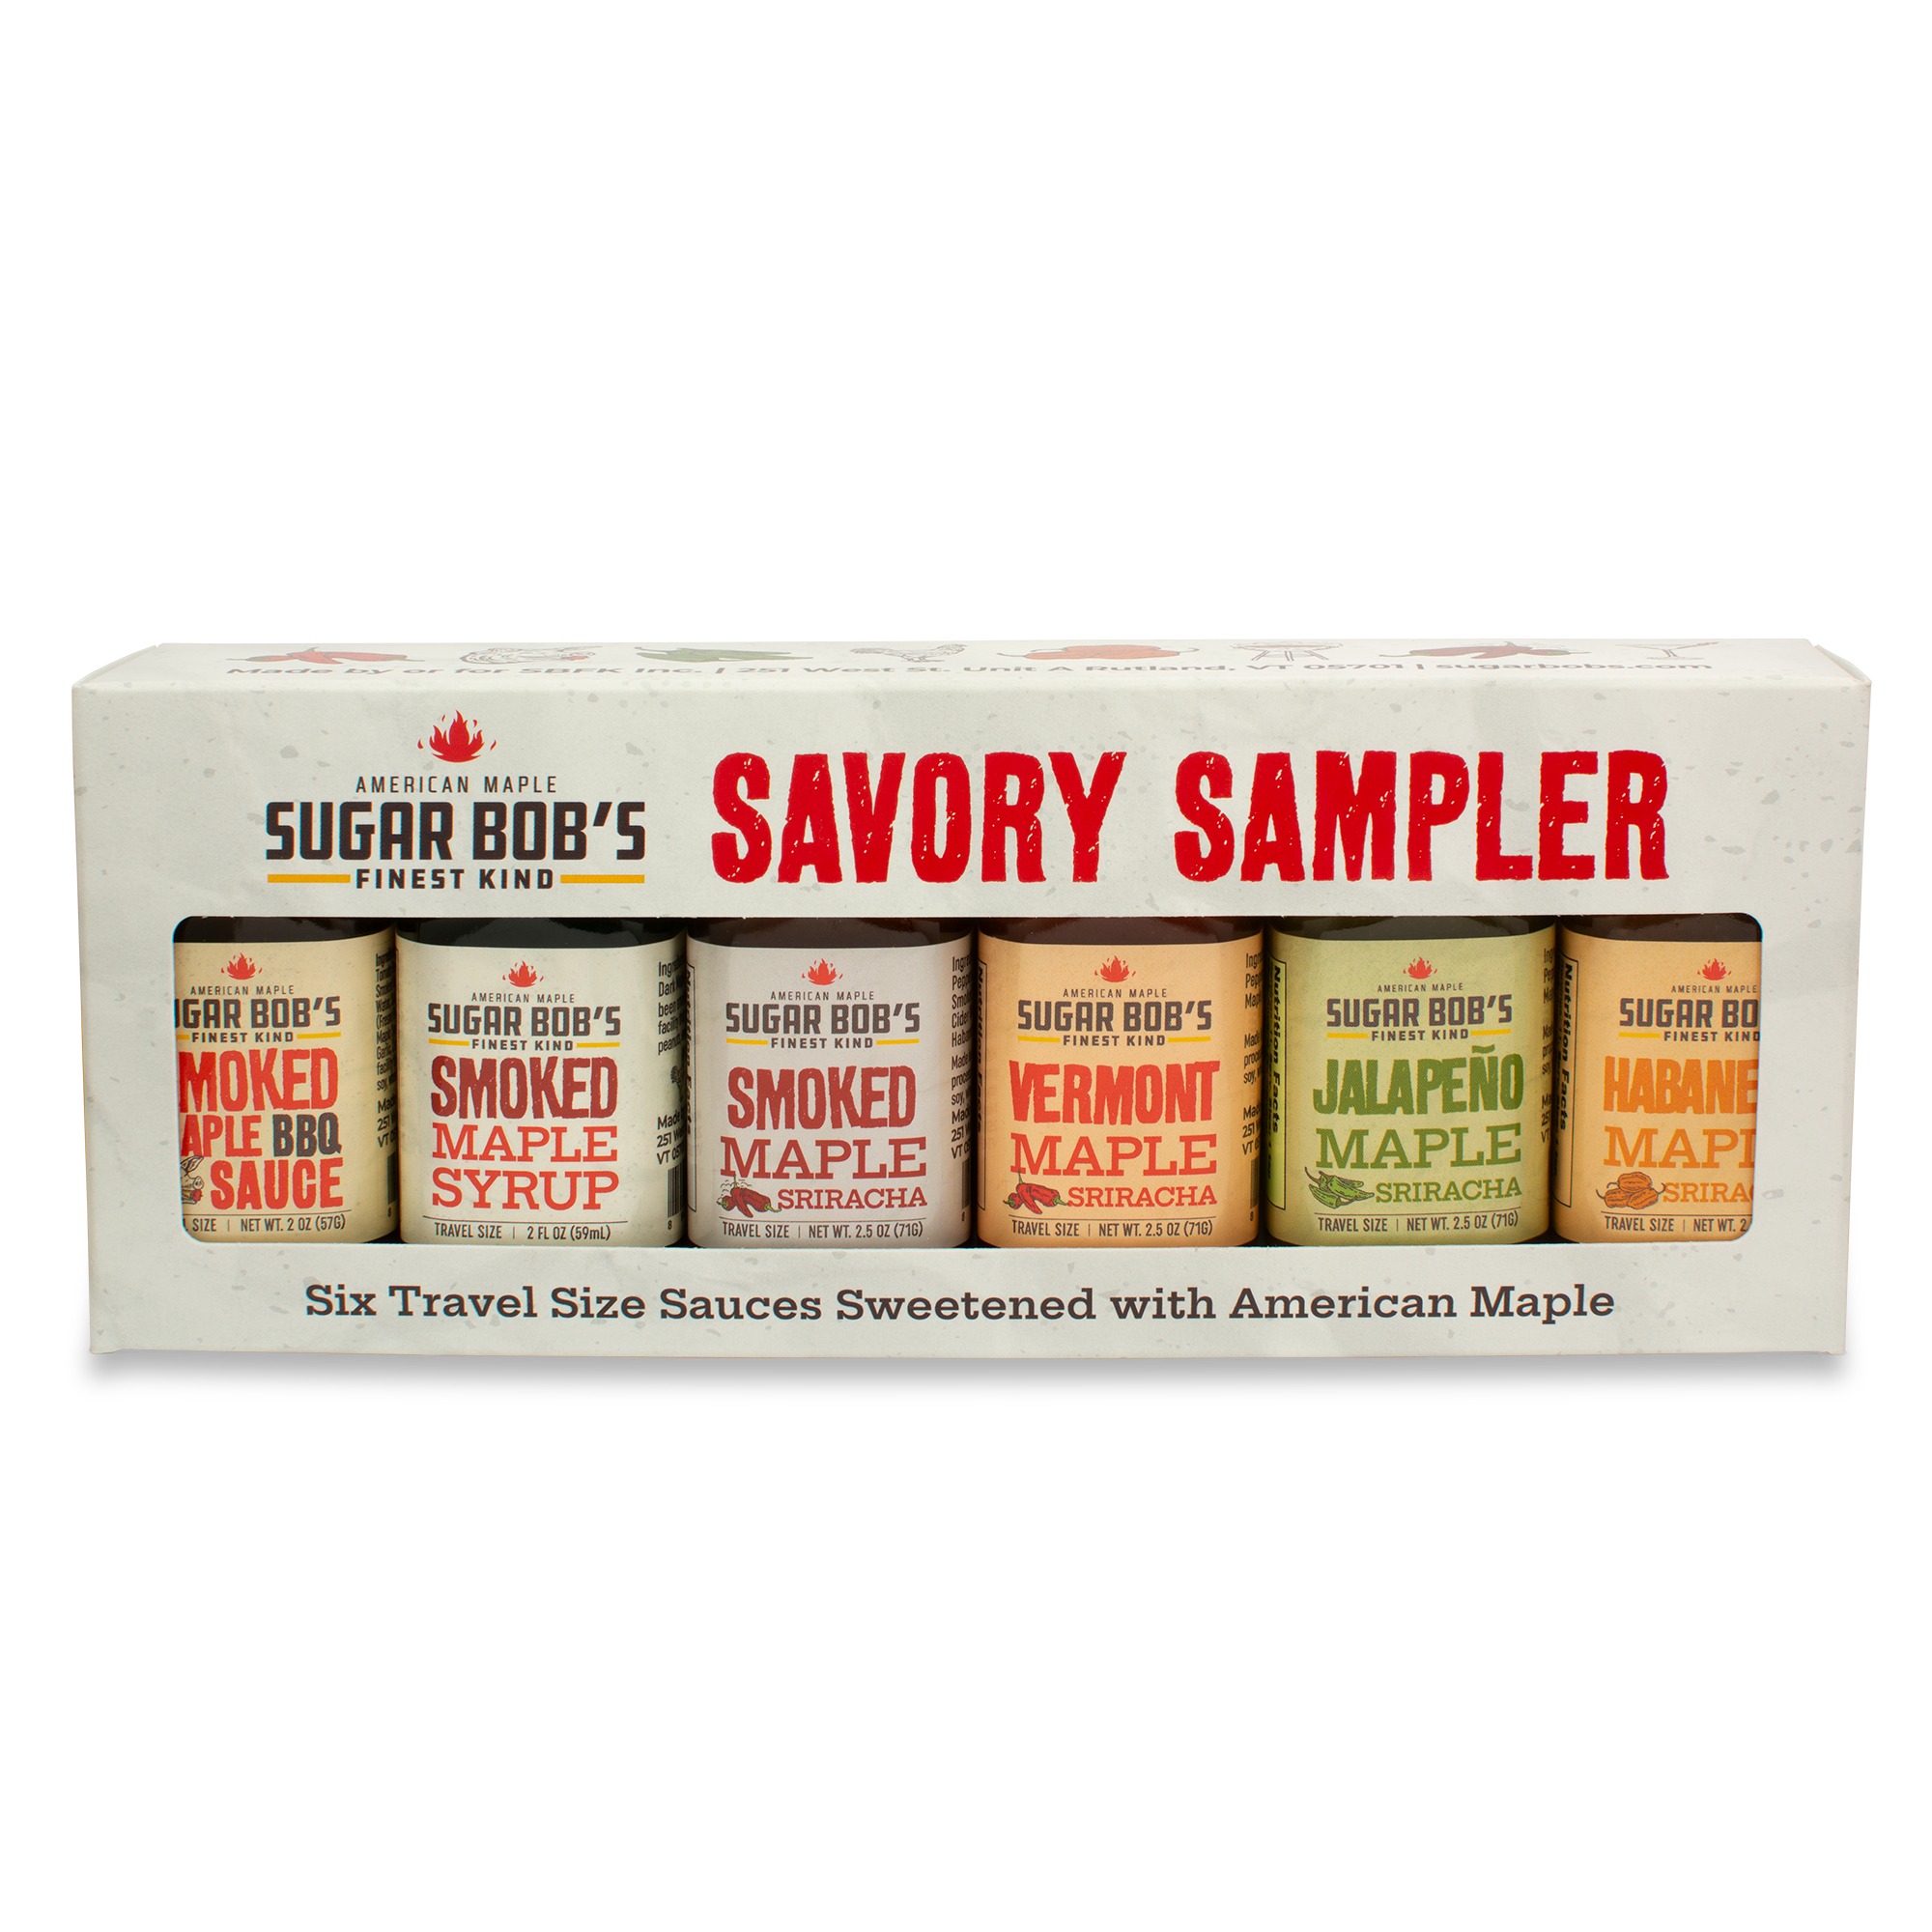 Sugar Bob's Finest Kind - Sugar Bob's Savory Sampler